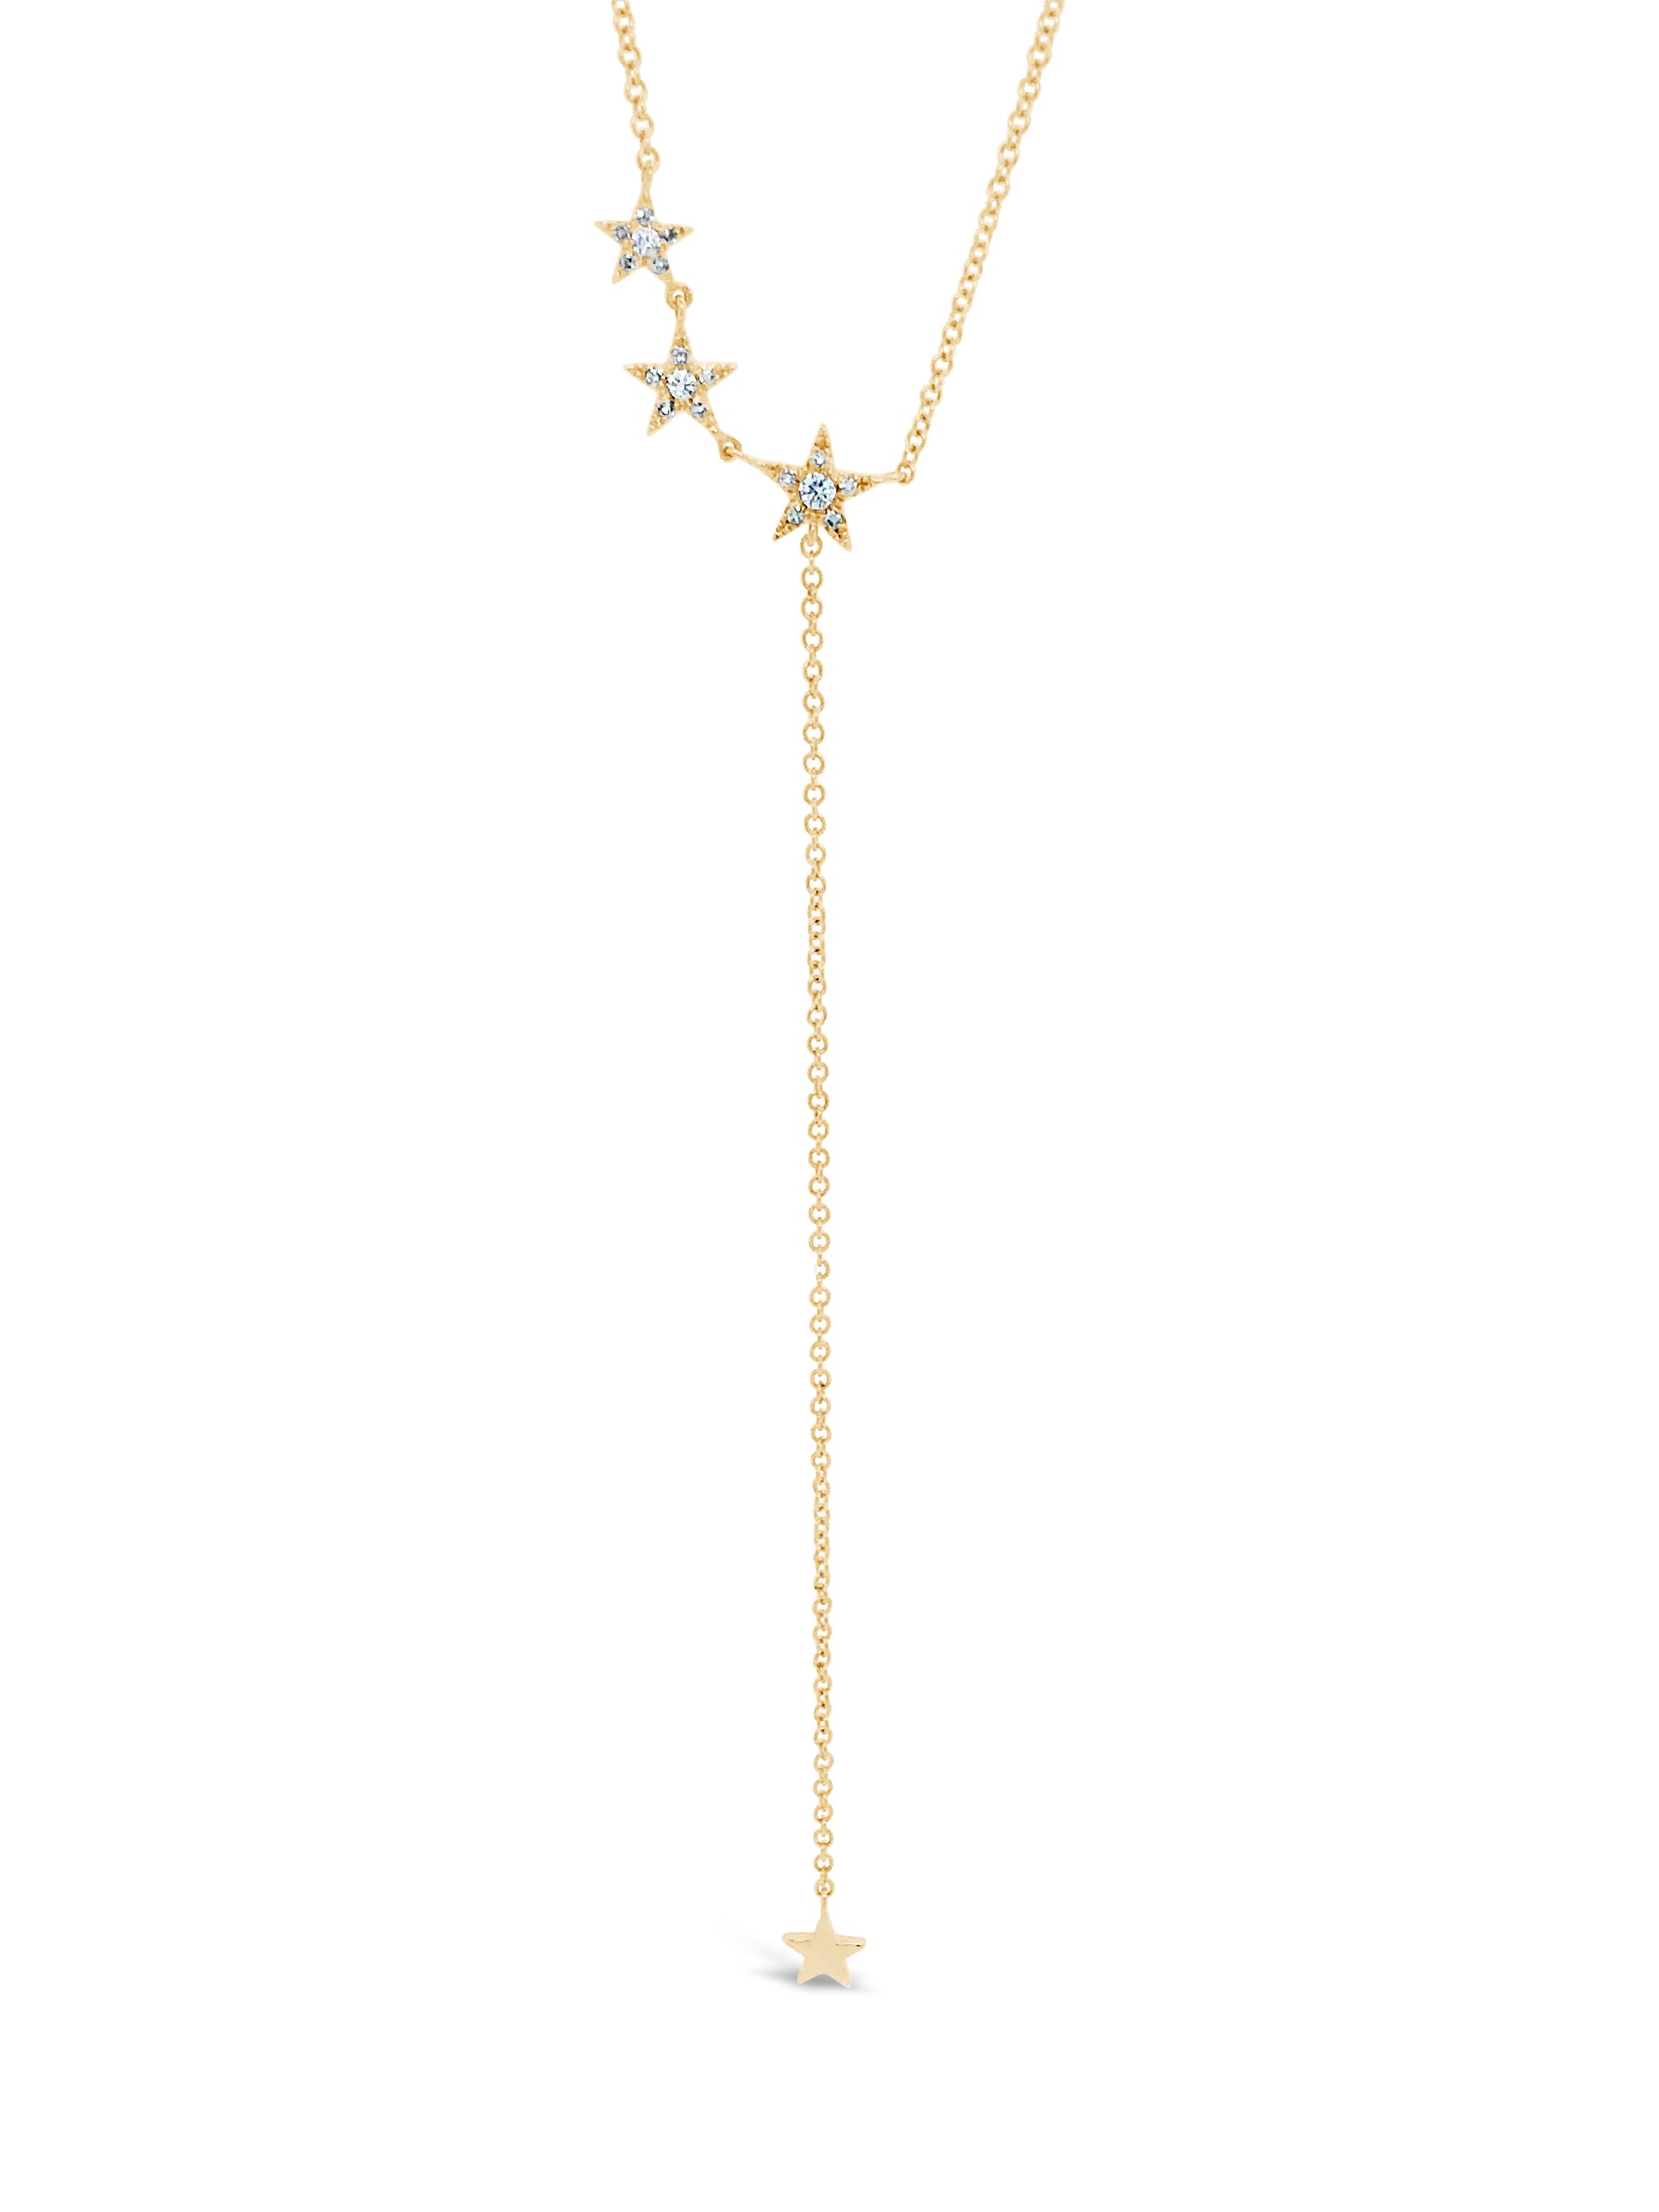 Diamond Star Lariat Necklace - 14k yellow gold weighing 1.88 grams 18 round diamonds weighing .09 carats